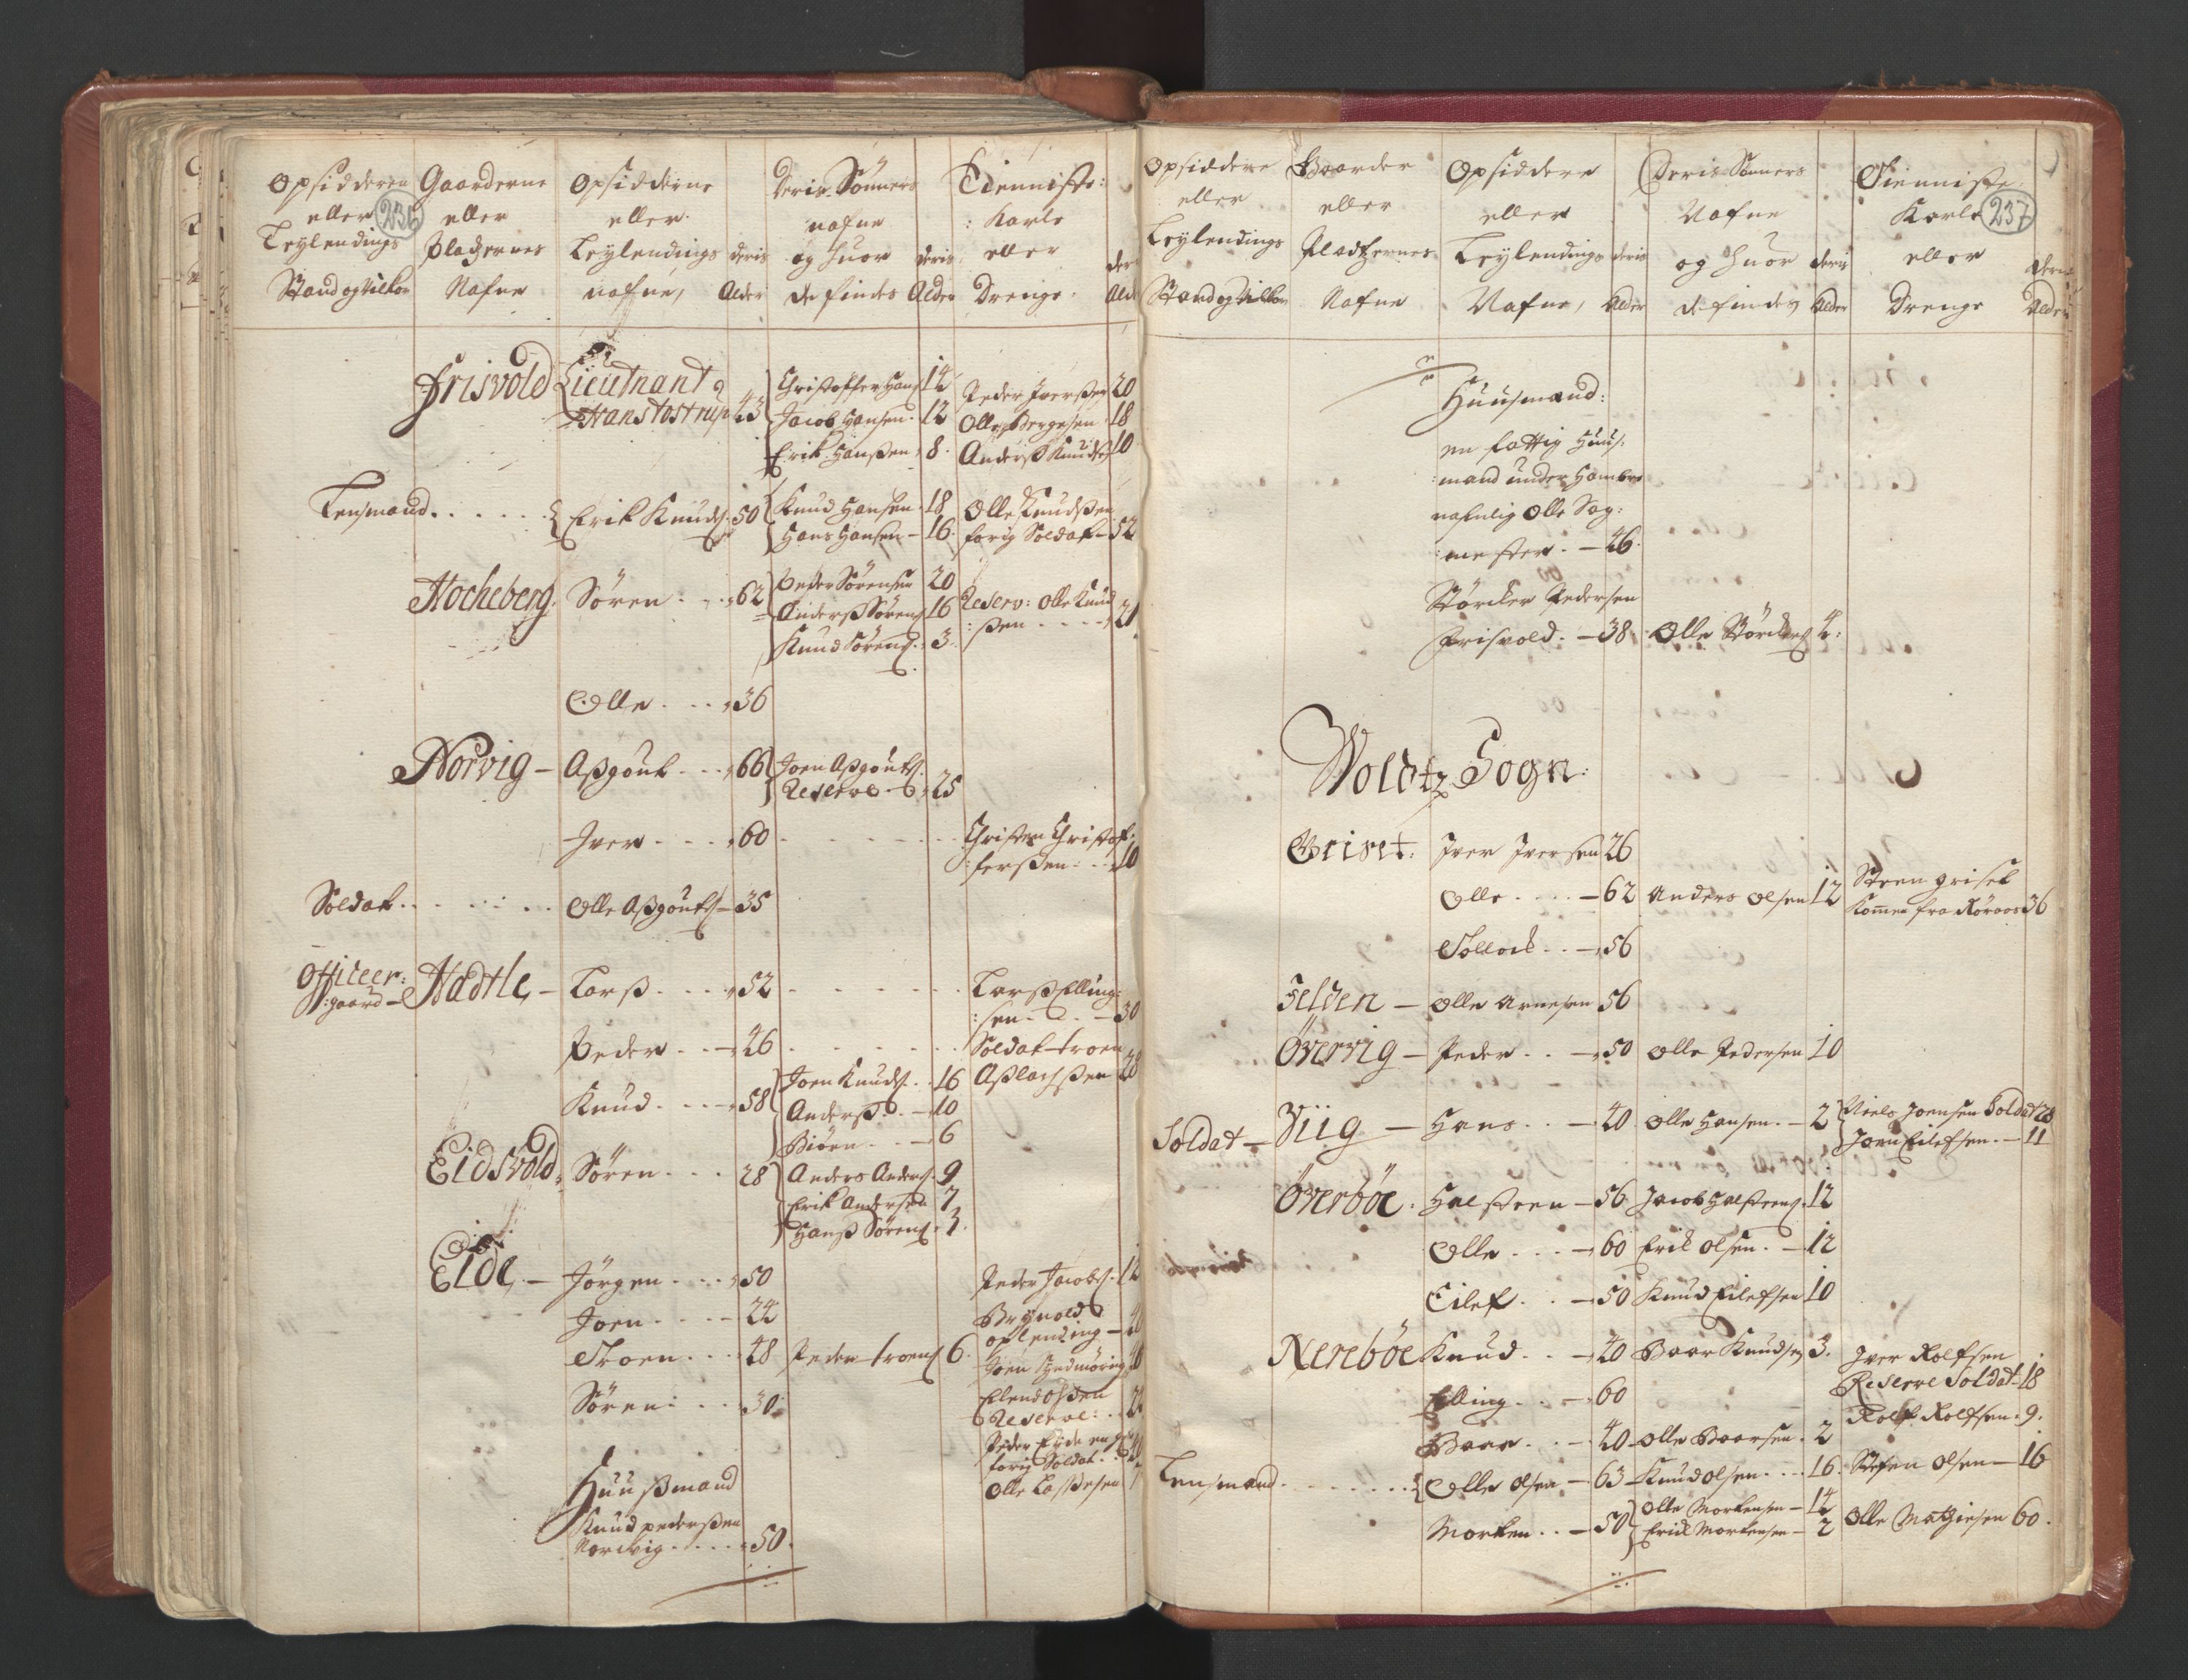 RA, Manntallet 1701, nr. 11: Nordmøre fogderi og Romsdal fogderi, 1701, s. 236-237